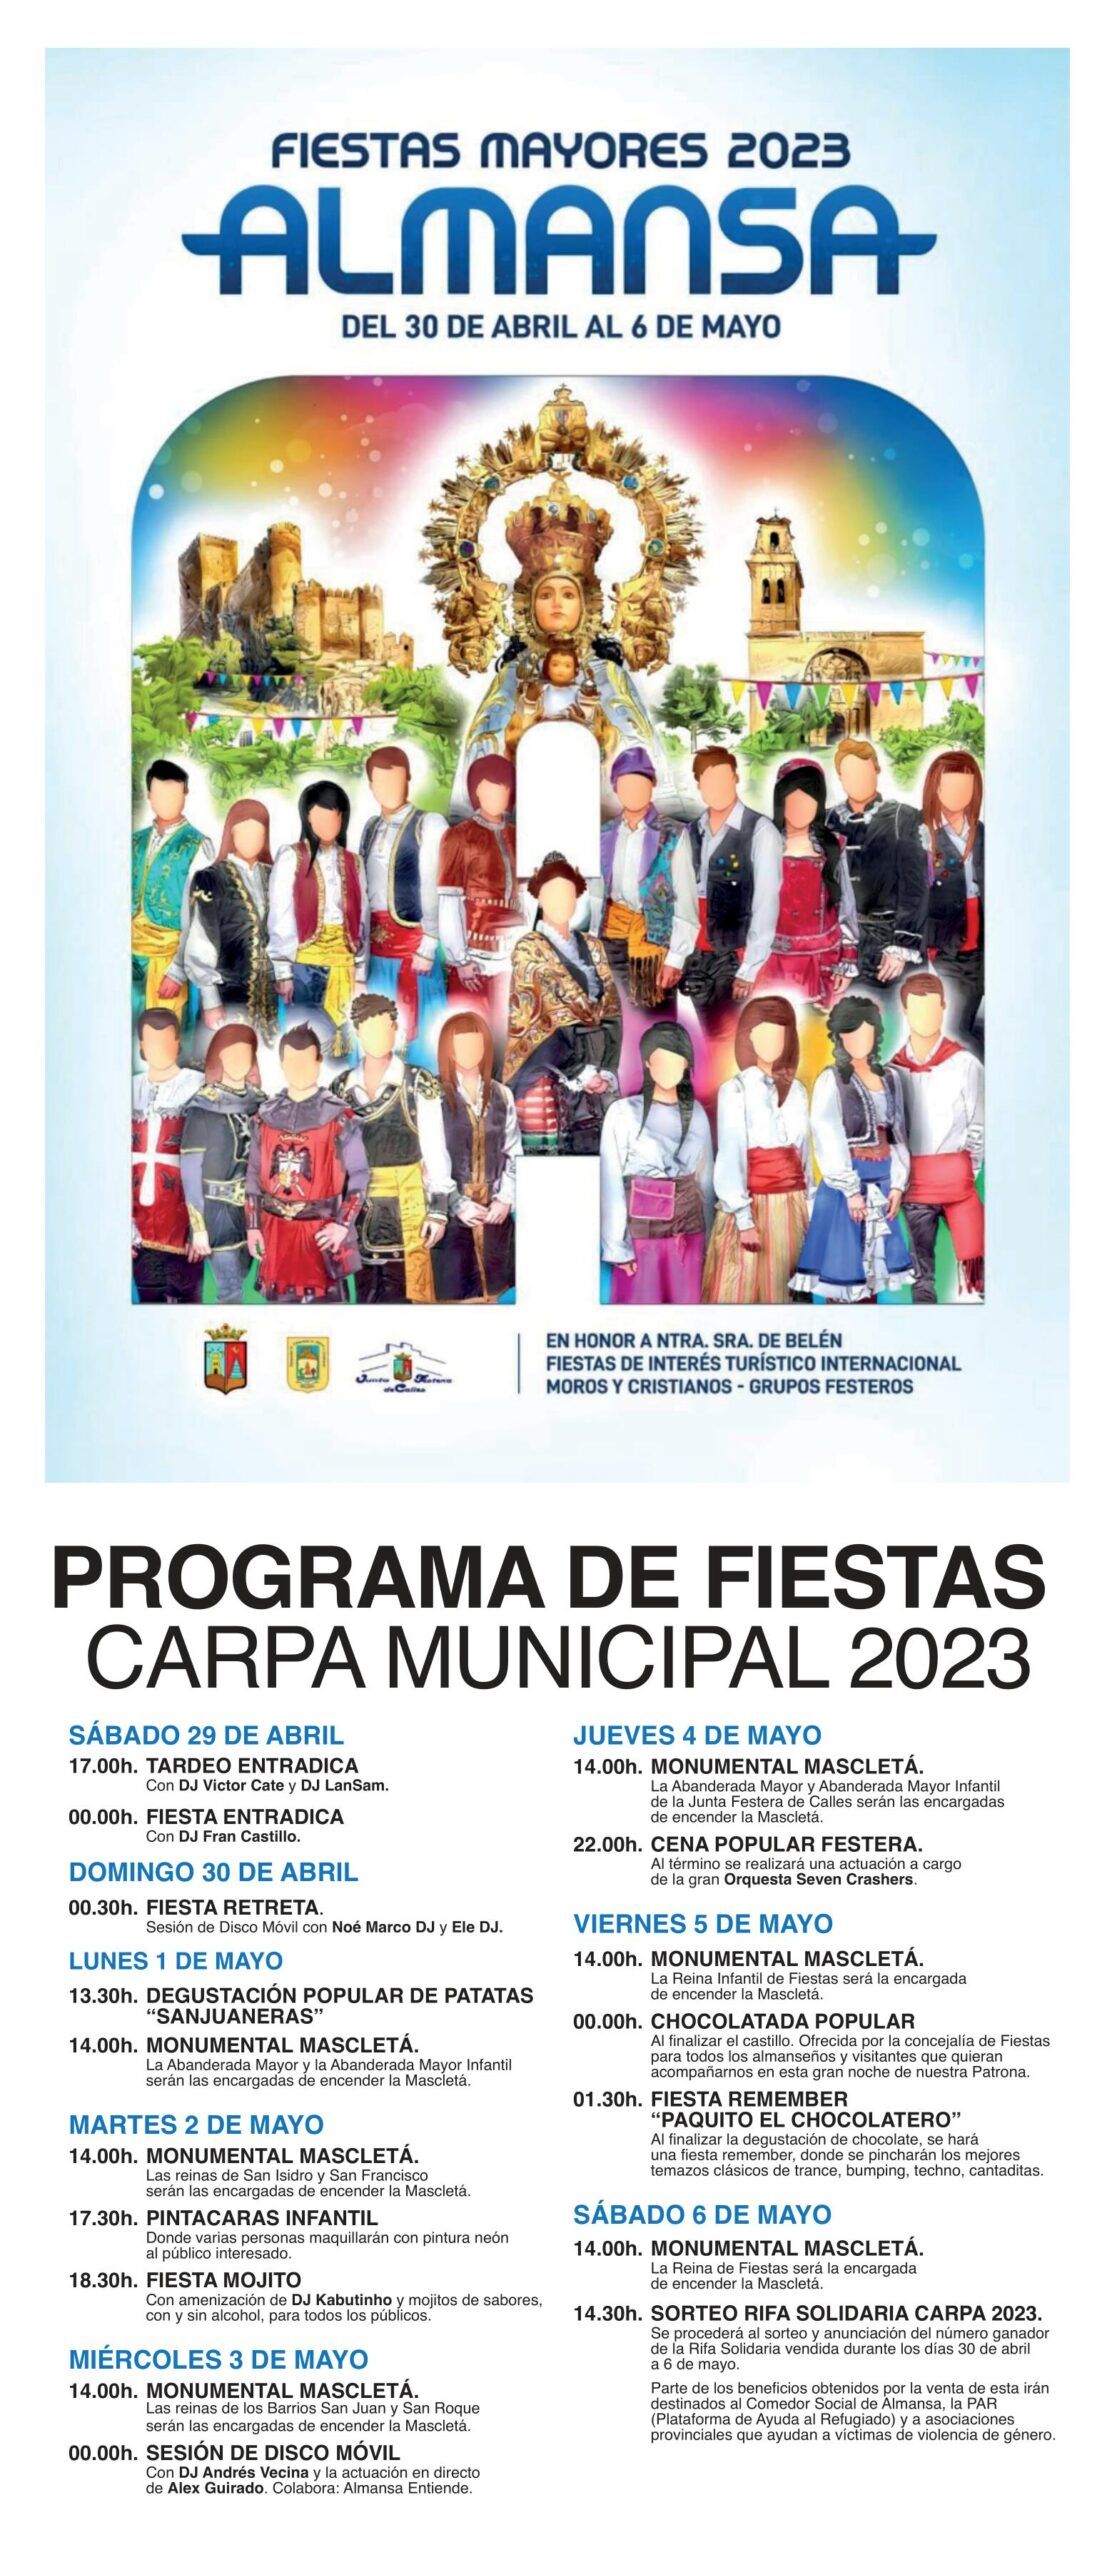 Programa Carpa municipal fiestas almansa 2023